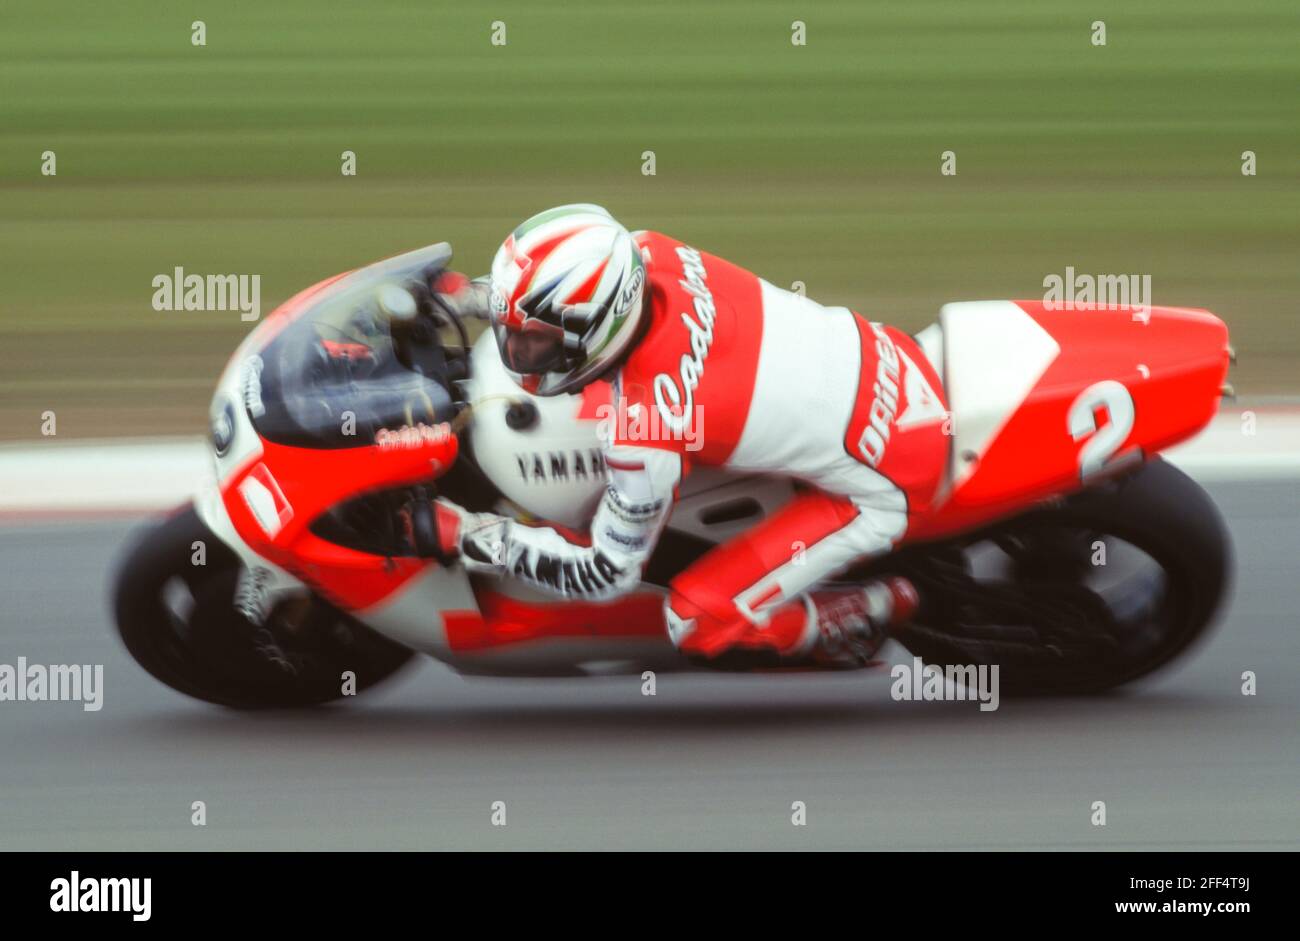 Luca Cadalora (ITA), Yamaha 500, Deutschland Motorrad Grand Prix,  Nürburgring 1995 Stockfotografie - Alamy